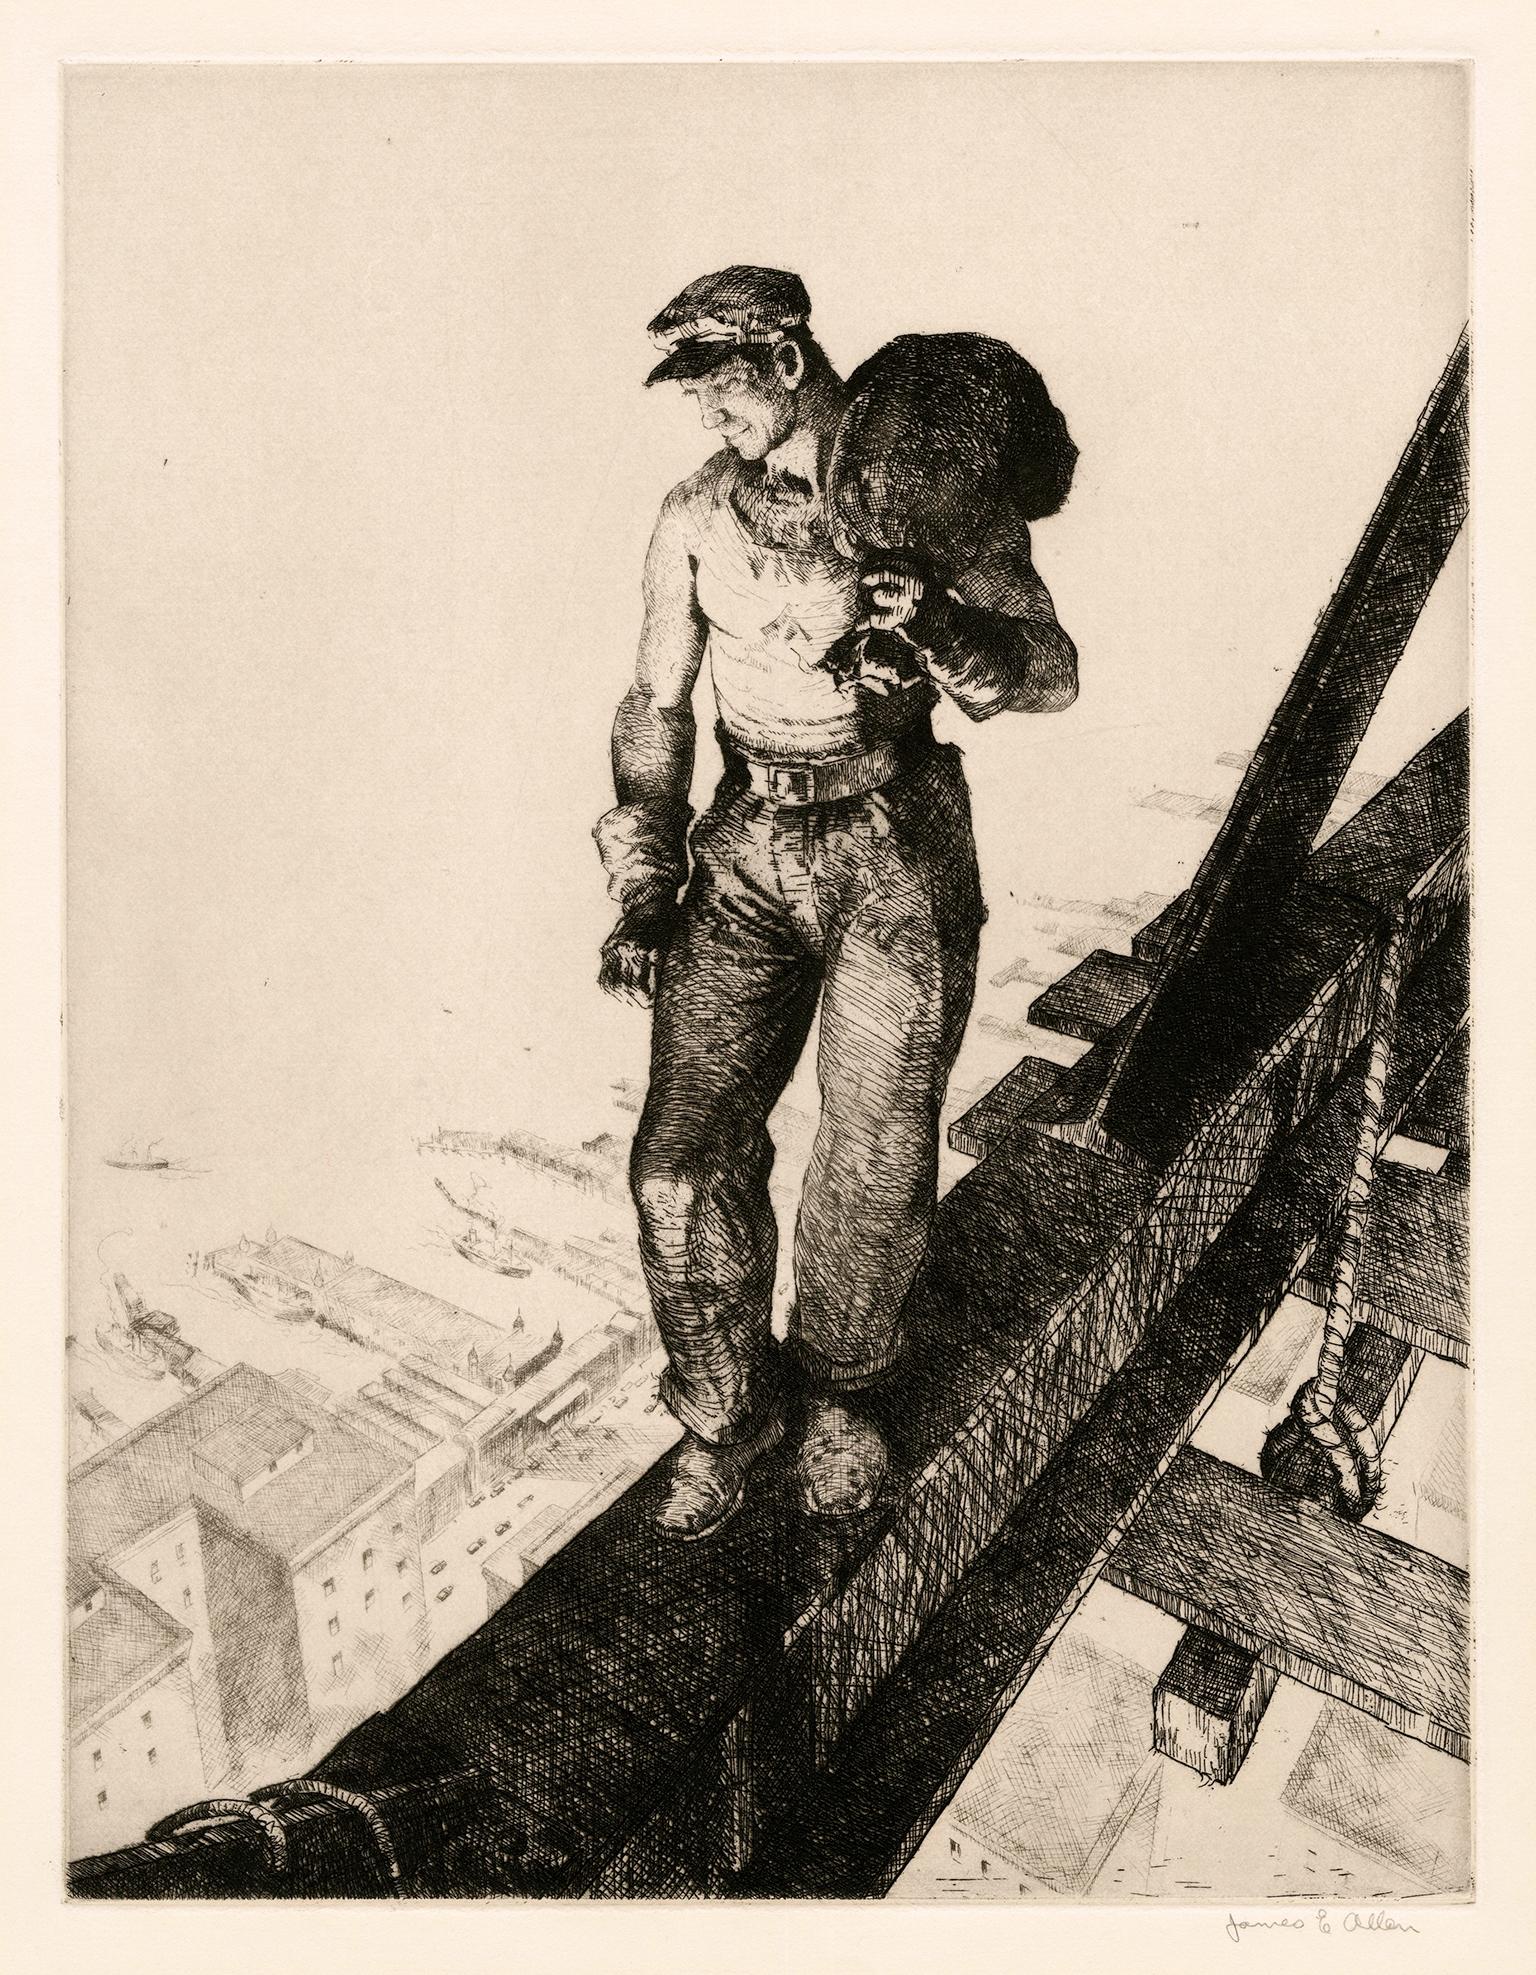 James Allen Figurative Print - 'Spiderboy' — 1930s American Realism, New York City